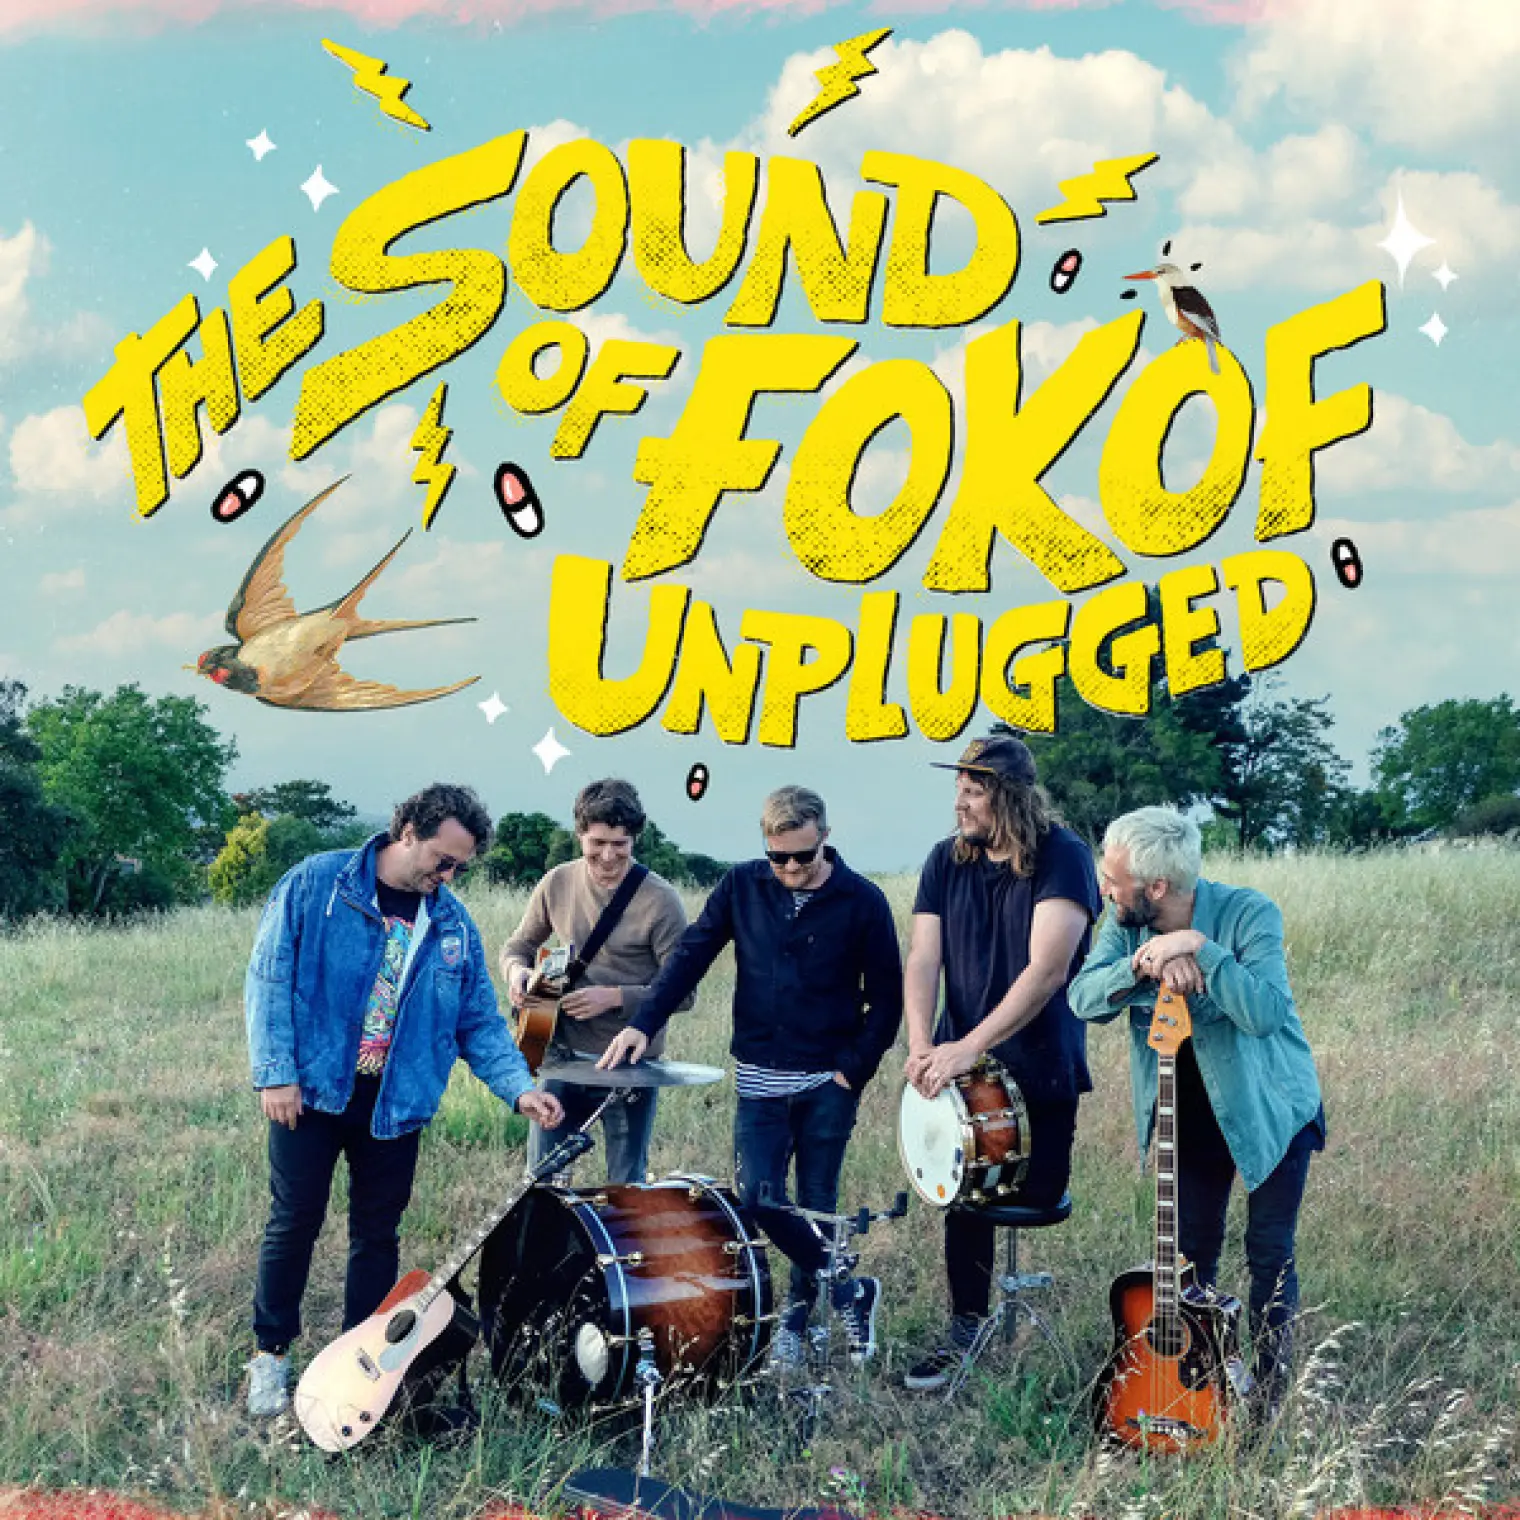 The Sound of Fokof Unplugged (Live) -  Fokofpolisiekar 